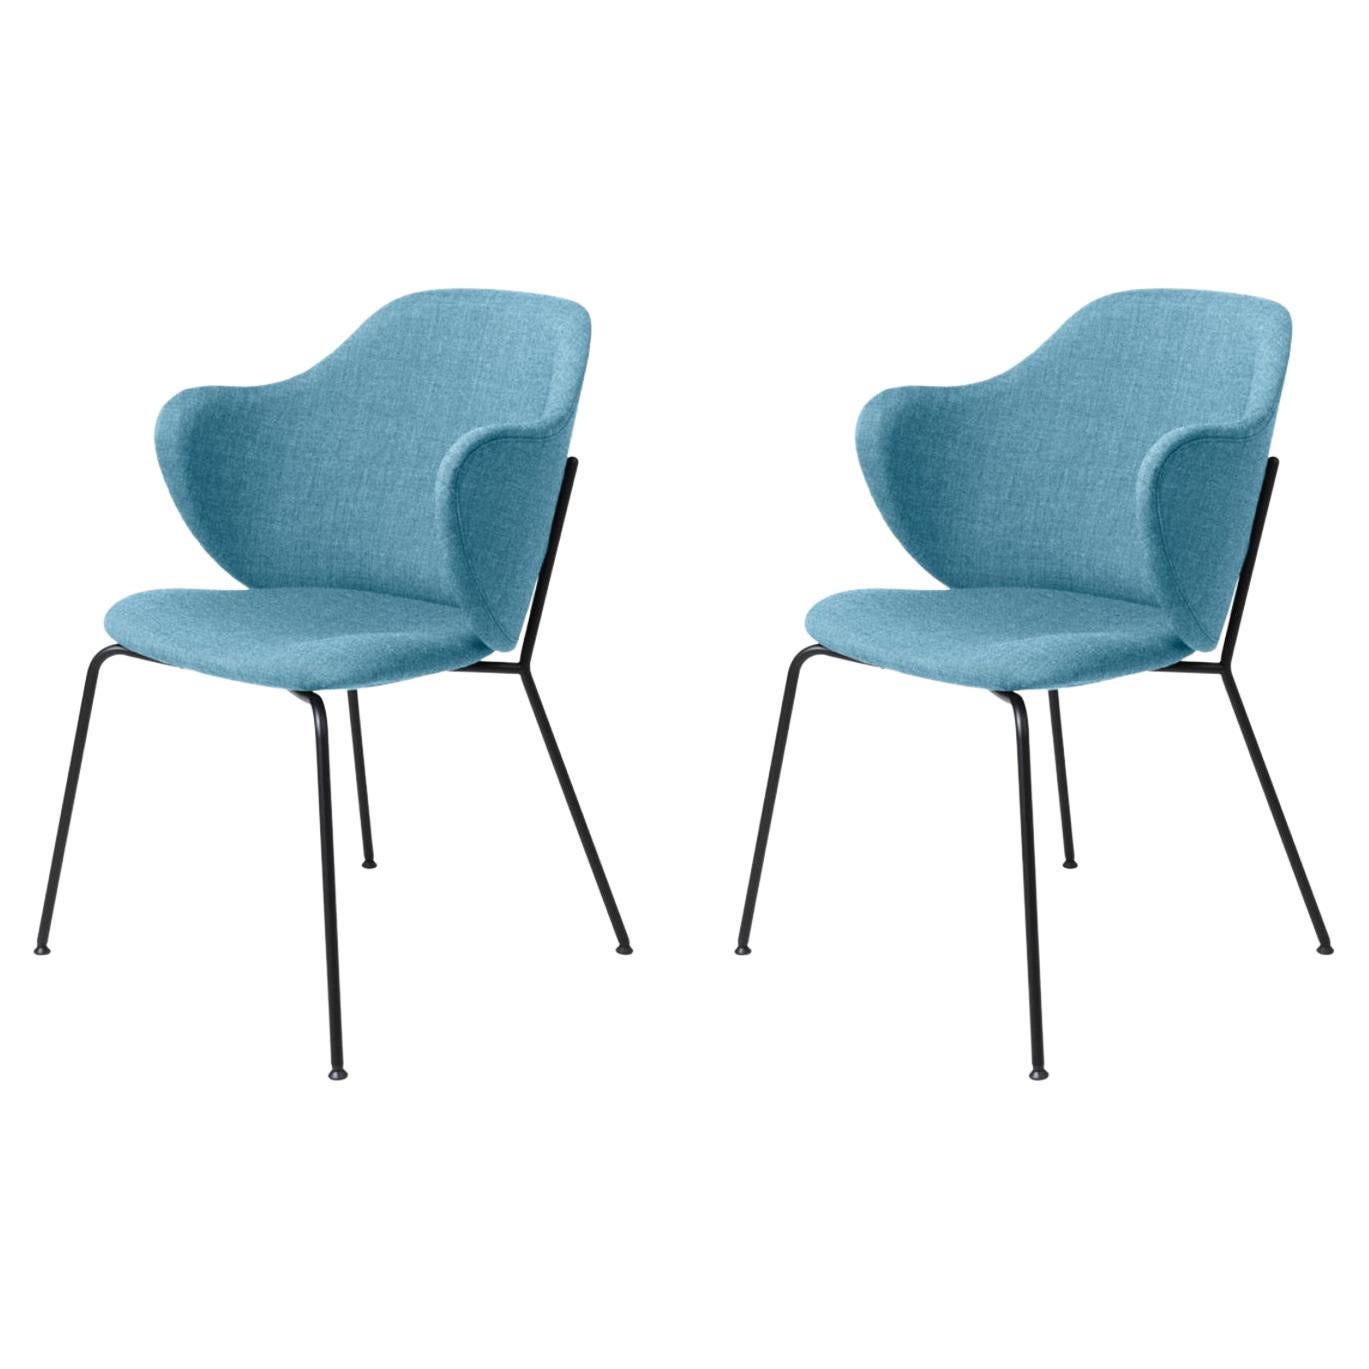 Set of 2 Blue Remix Lassen Chairs by Lassen